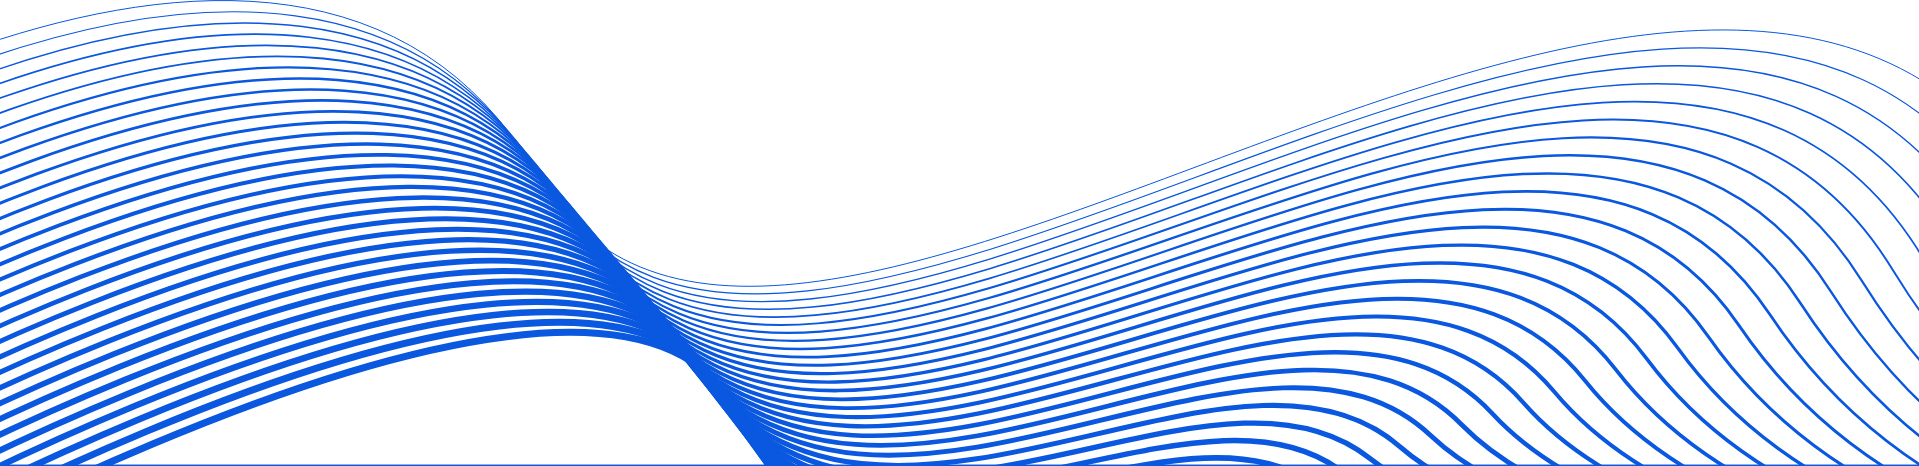 wave graphics